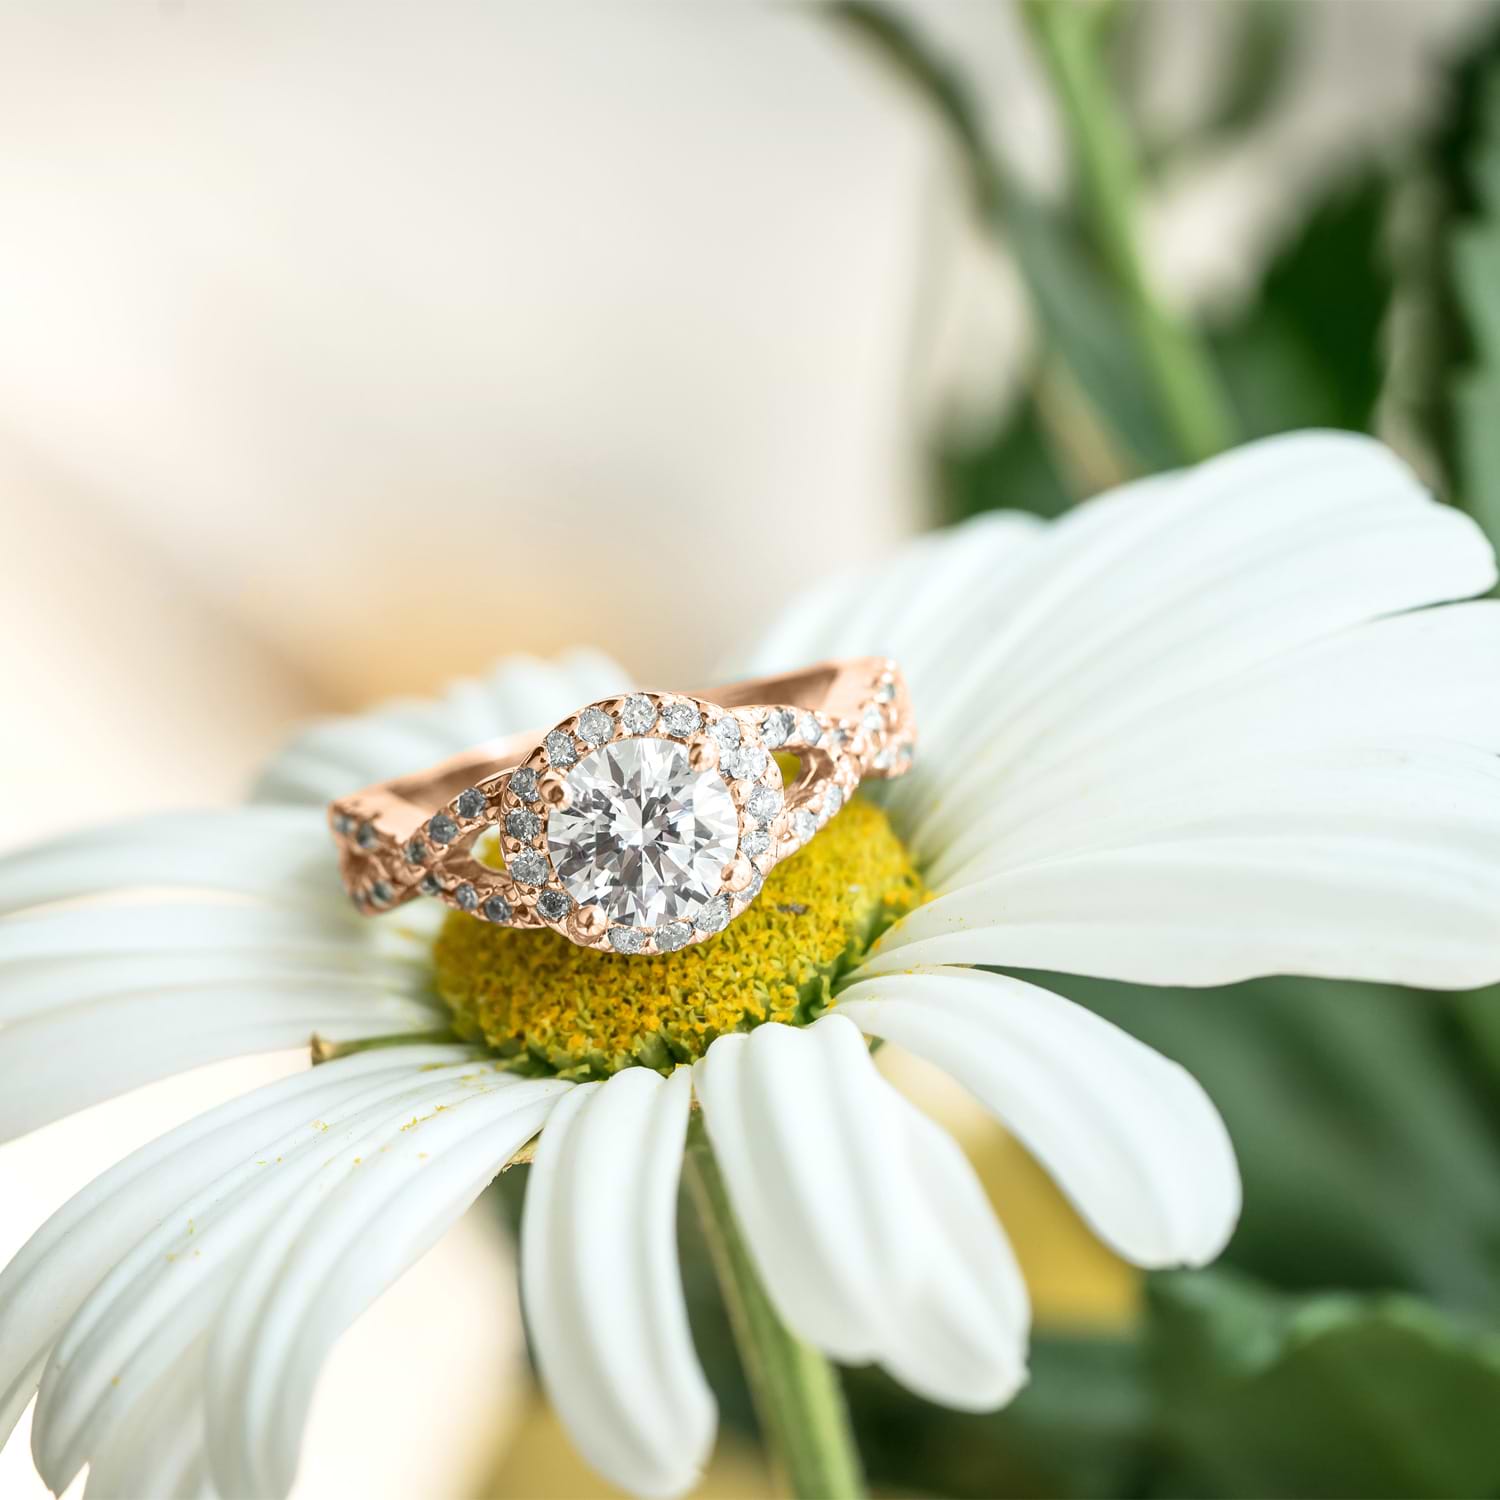 Twisted Infinity Engagement Ring Bridal Set 18k Rose Gold 0.27ct